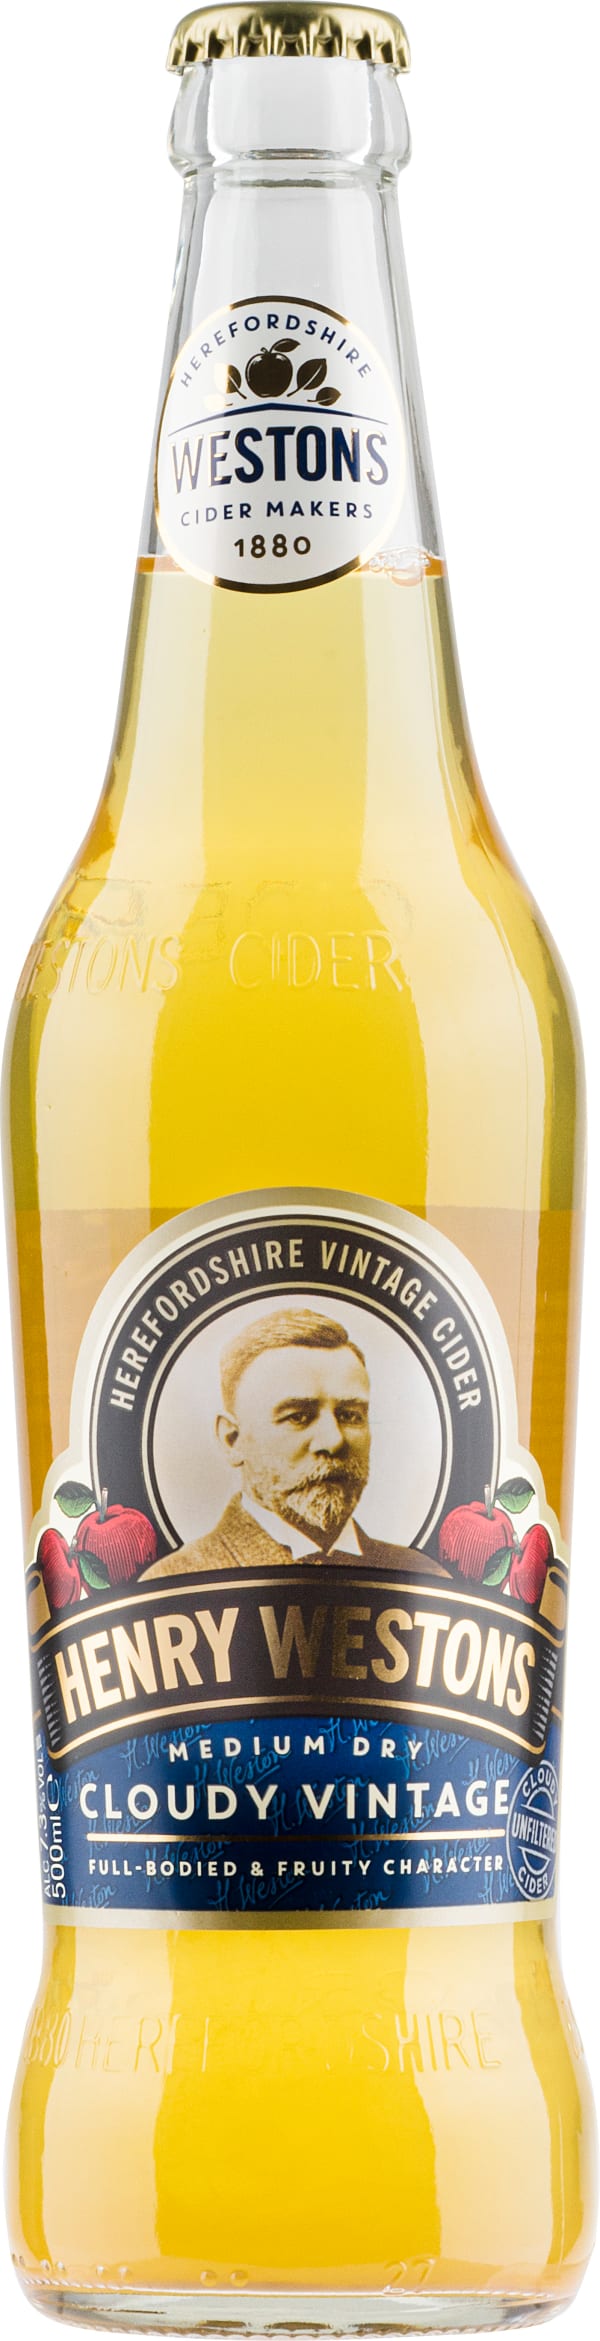 Henry Westons- Cloudy Vintage Cider 7.3% ABV 500ml Bottle